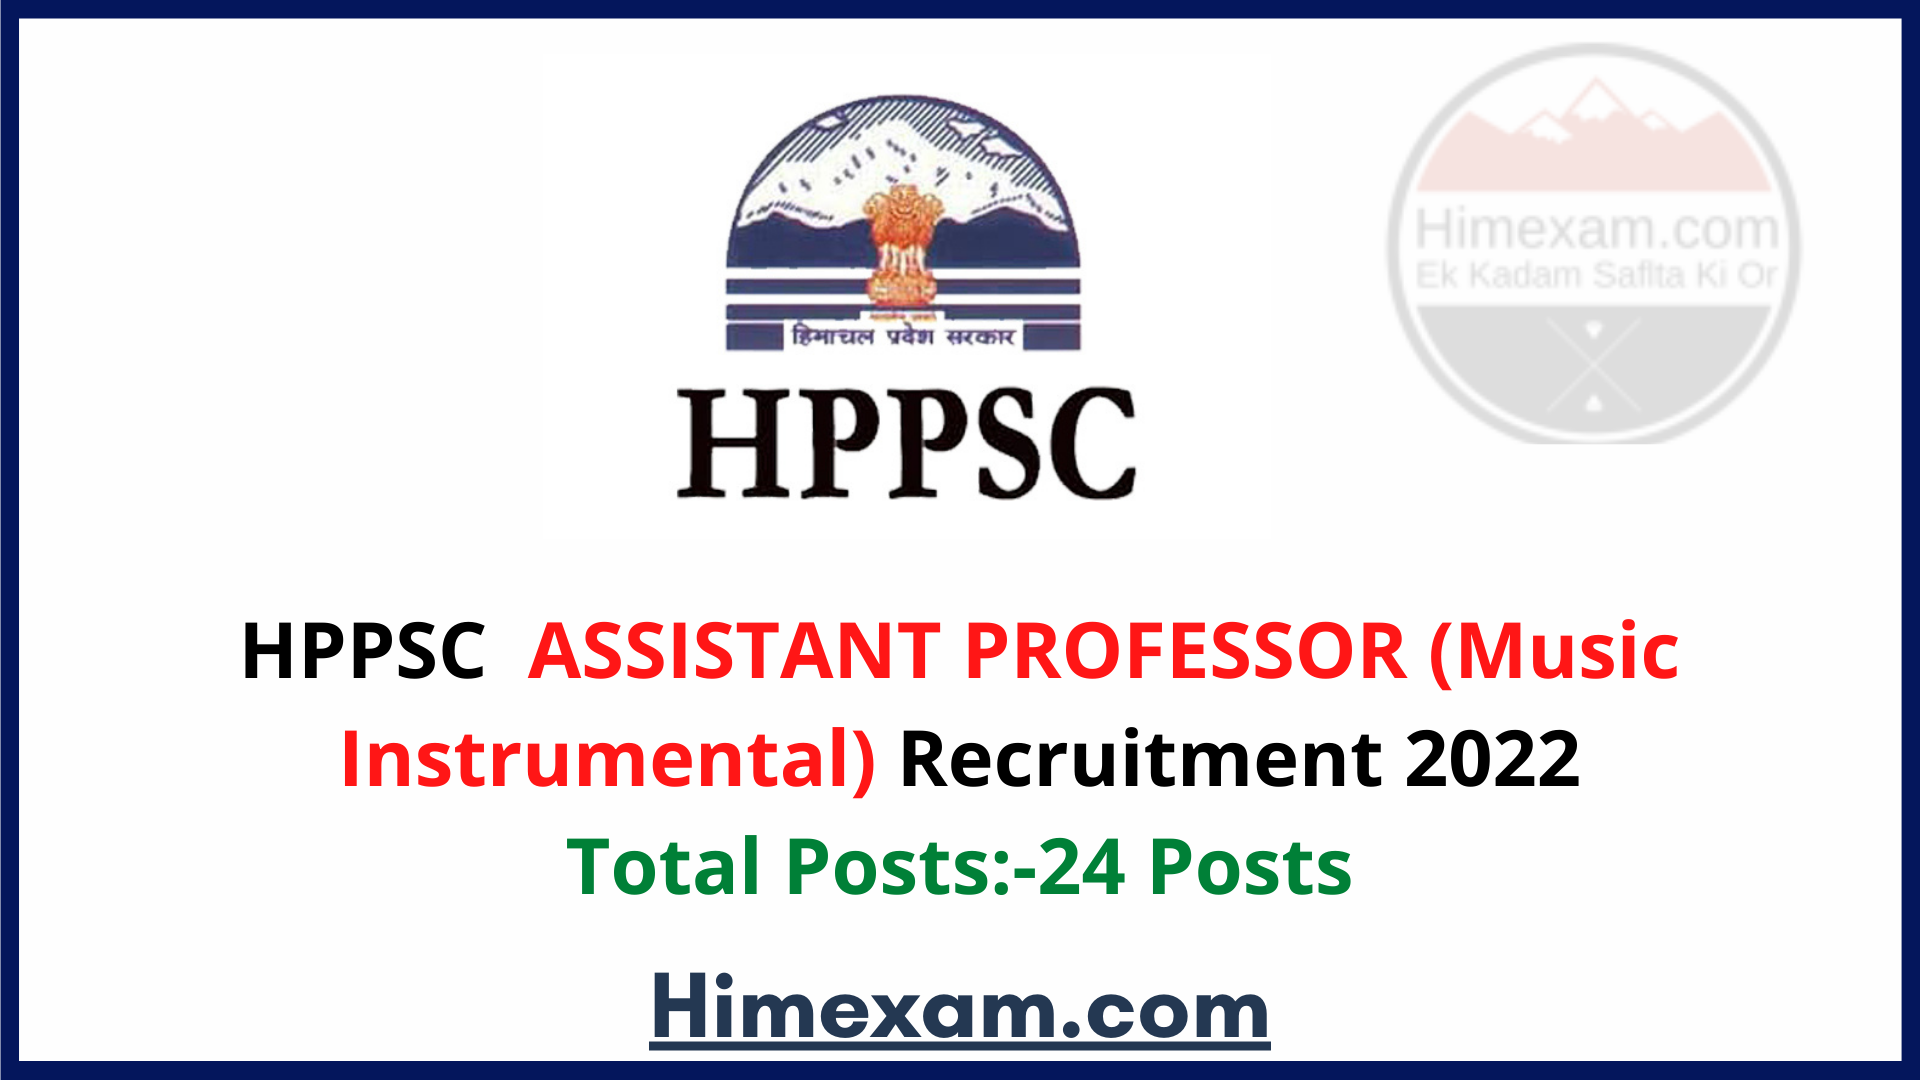 HPPSC ASSISTANT PROFESSOR (Music Instrumental) Recruitment 2022